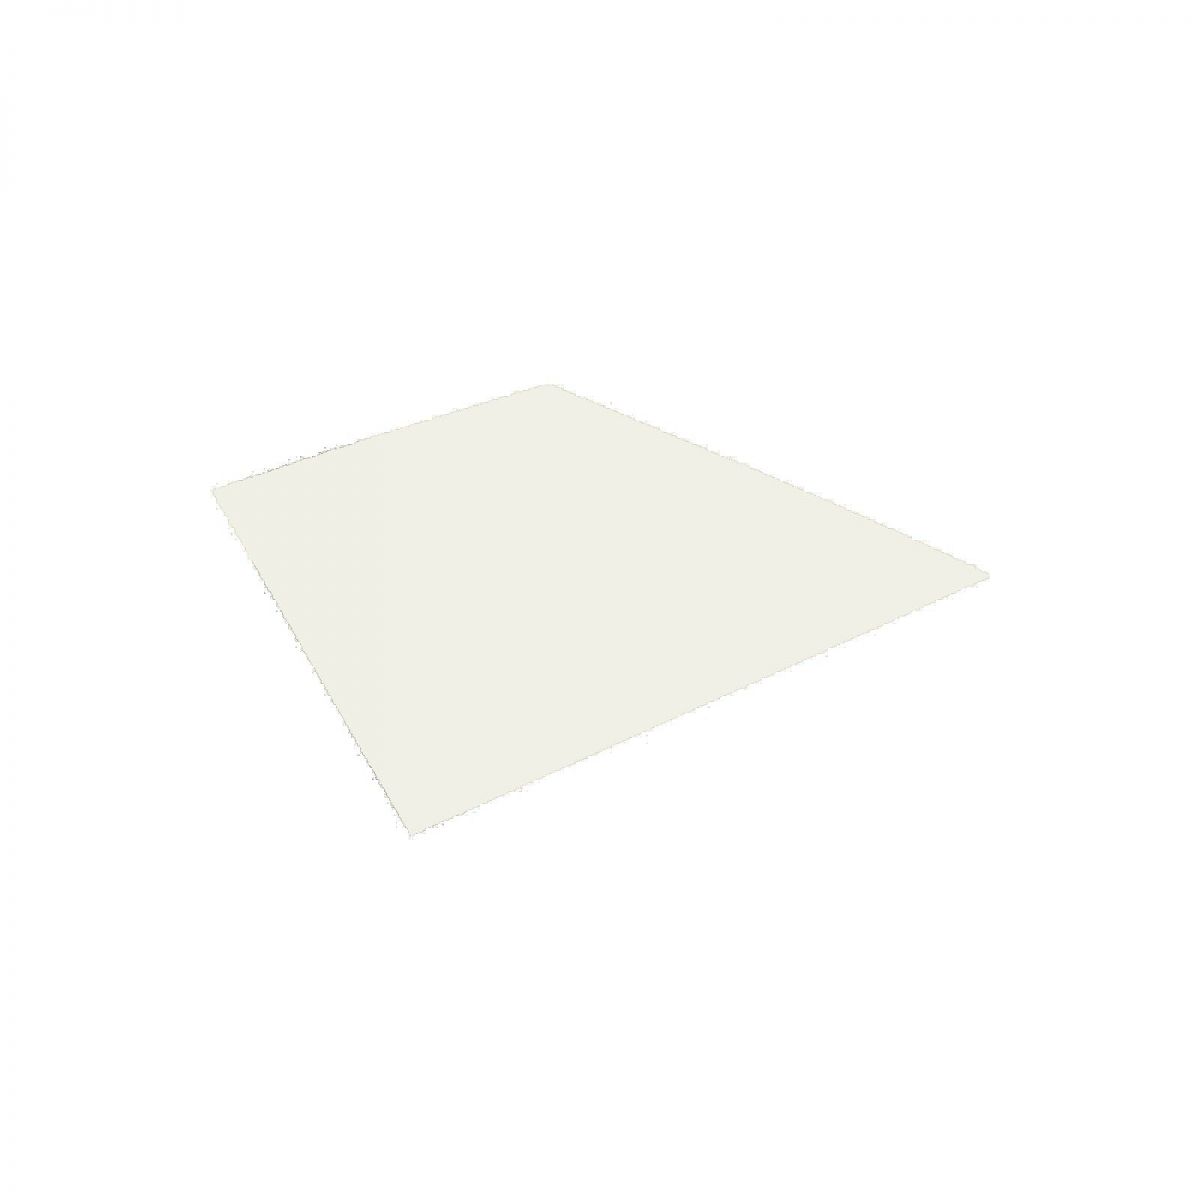 Tôle Galvanisée - Blanc - 200x122cm - Ép: 0.65mm